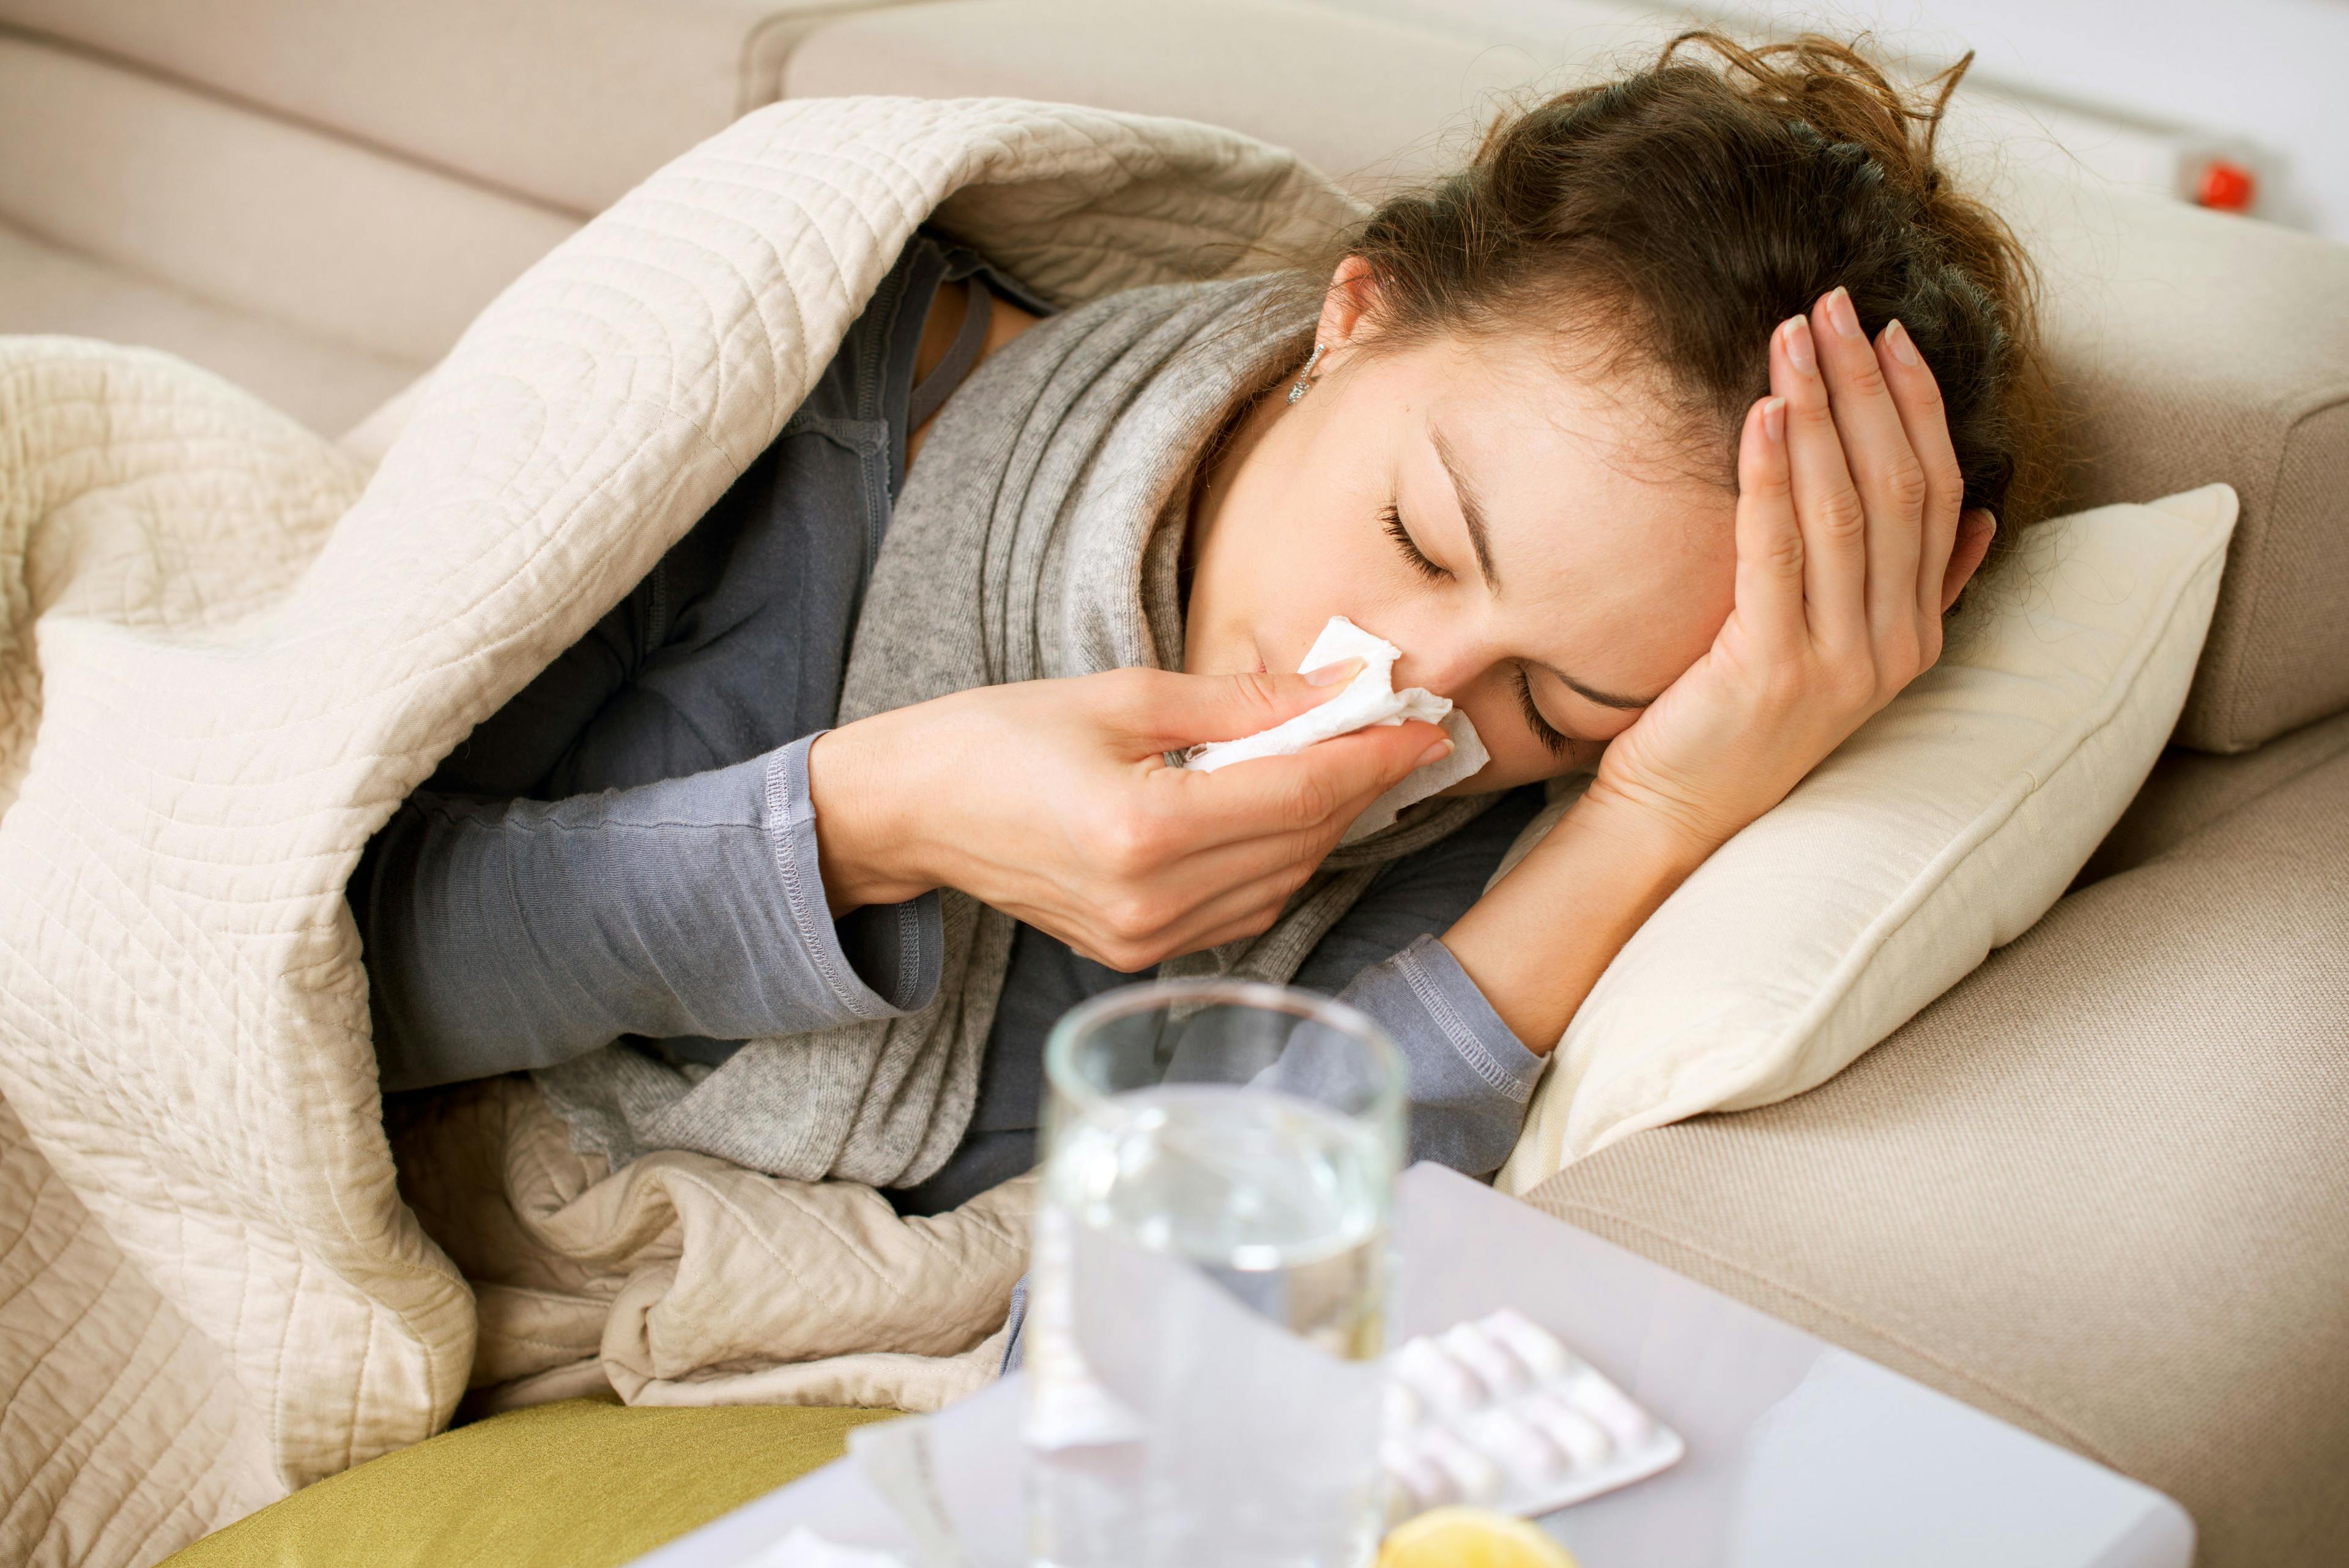 Sick Woman. Flu. Woman Caught Cold. Sneezing into Tissue | Image Credit: Subbotina Anna - stock.adobe.com